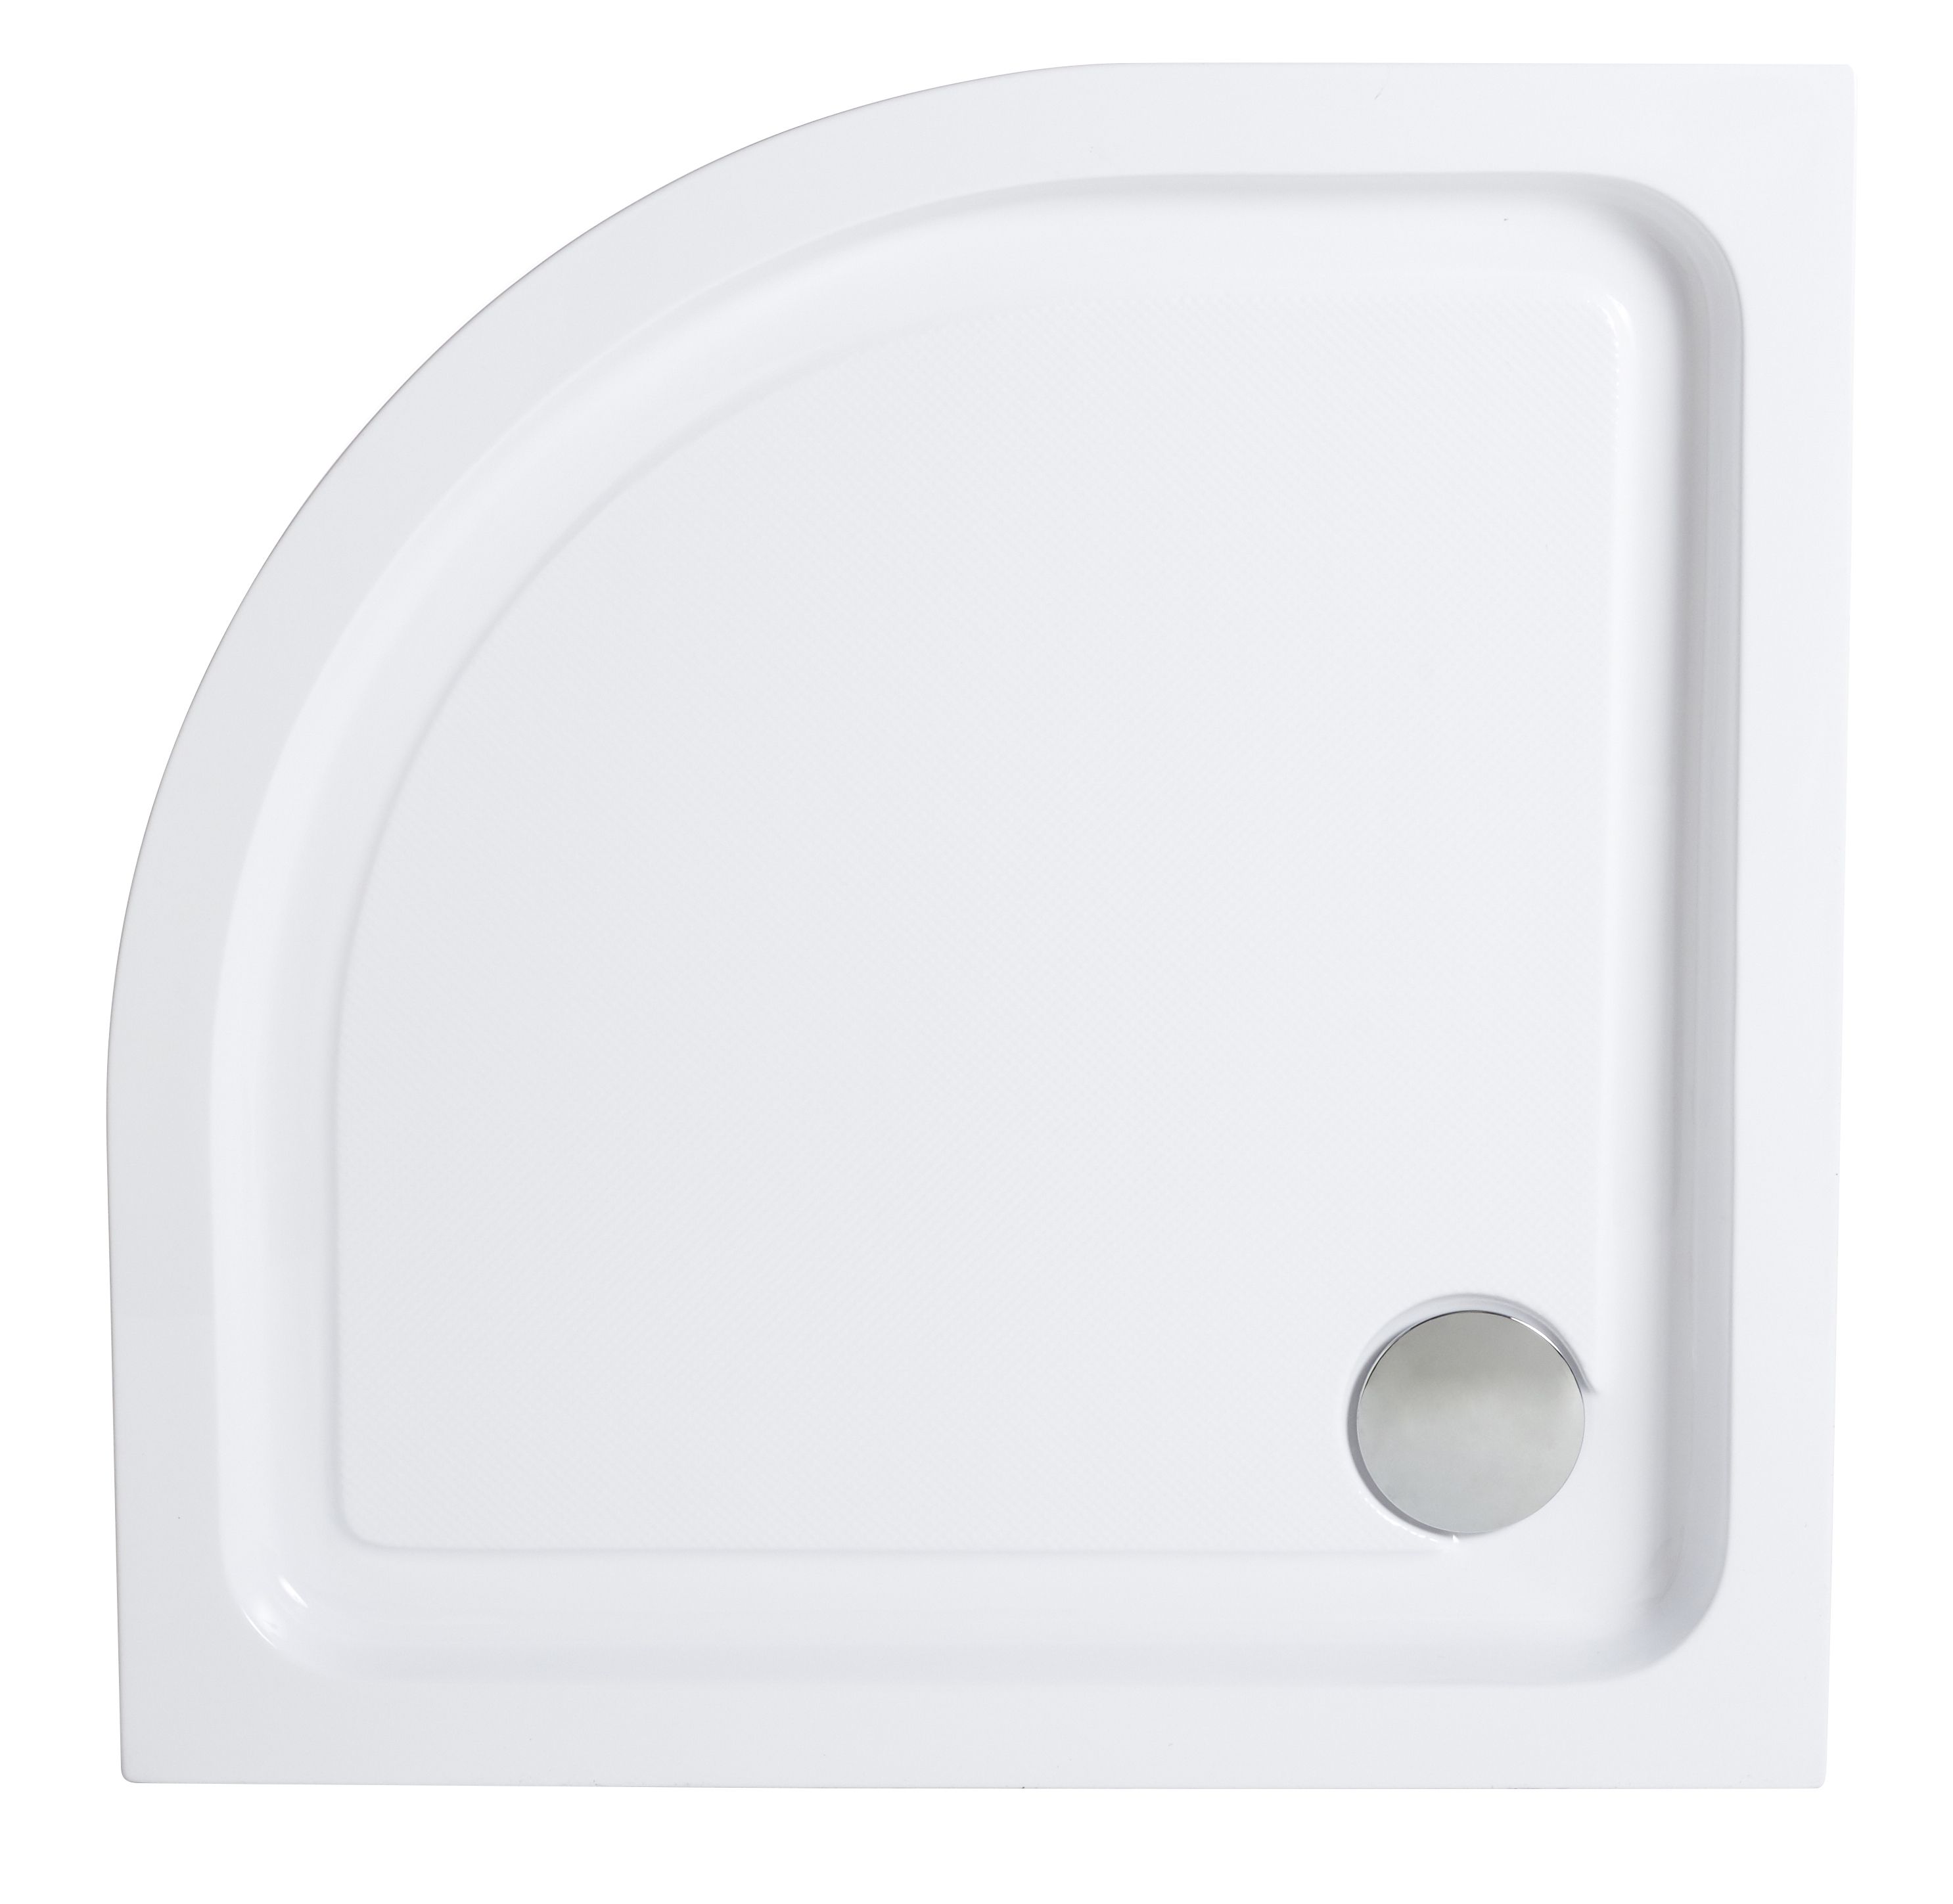 GoodHome Onega Silver effect Quadrant Shower Enclosure & tray - Corner entry double sliding door (H)190cm (W)90cm (D)90cm